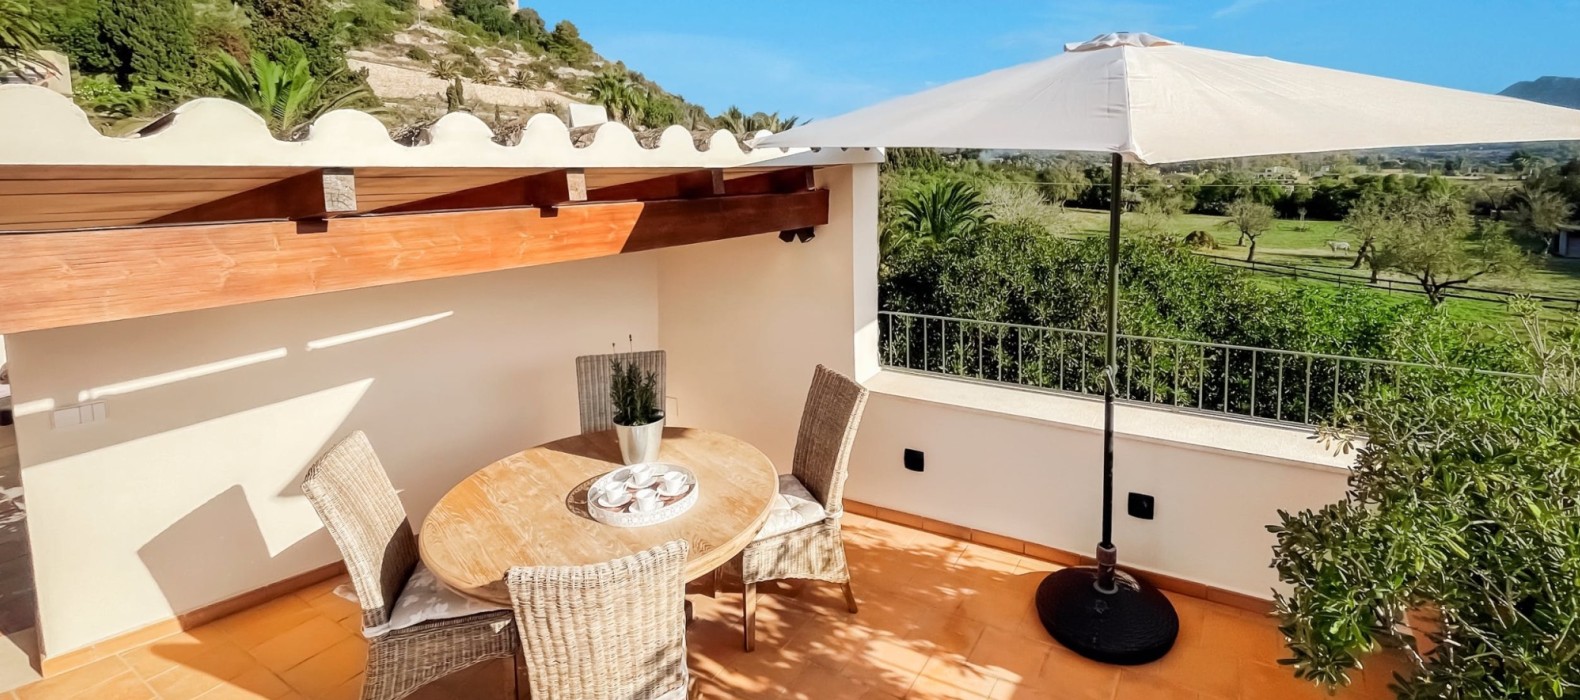 Terrace with a table of Casa Floris in Mallorca